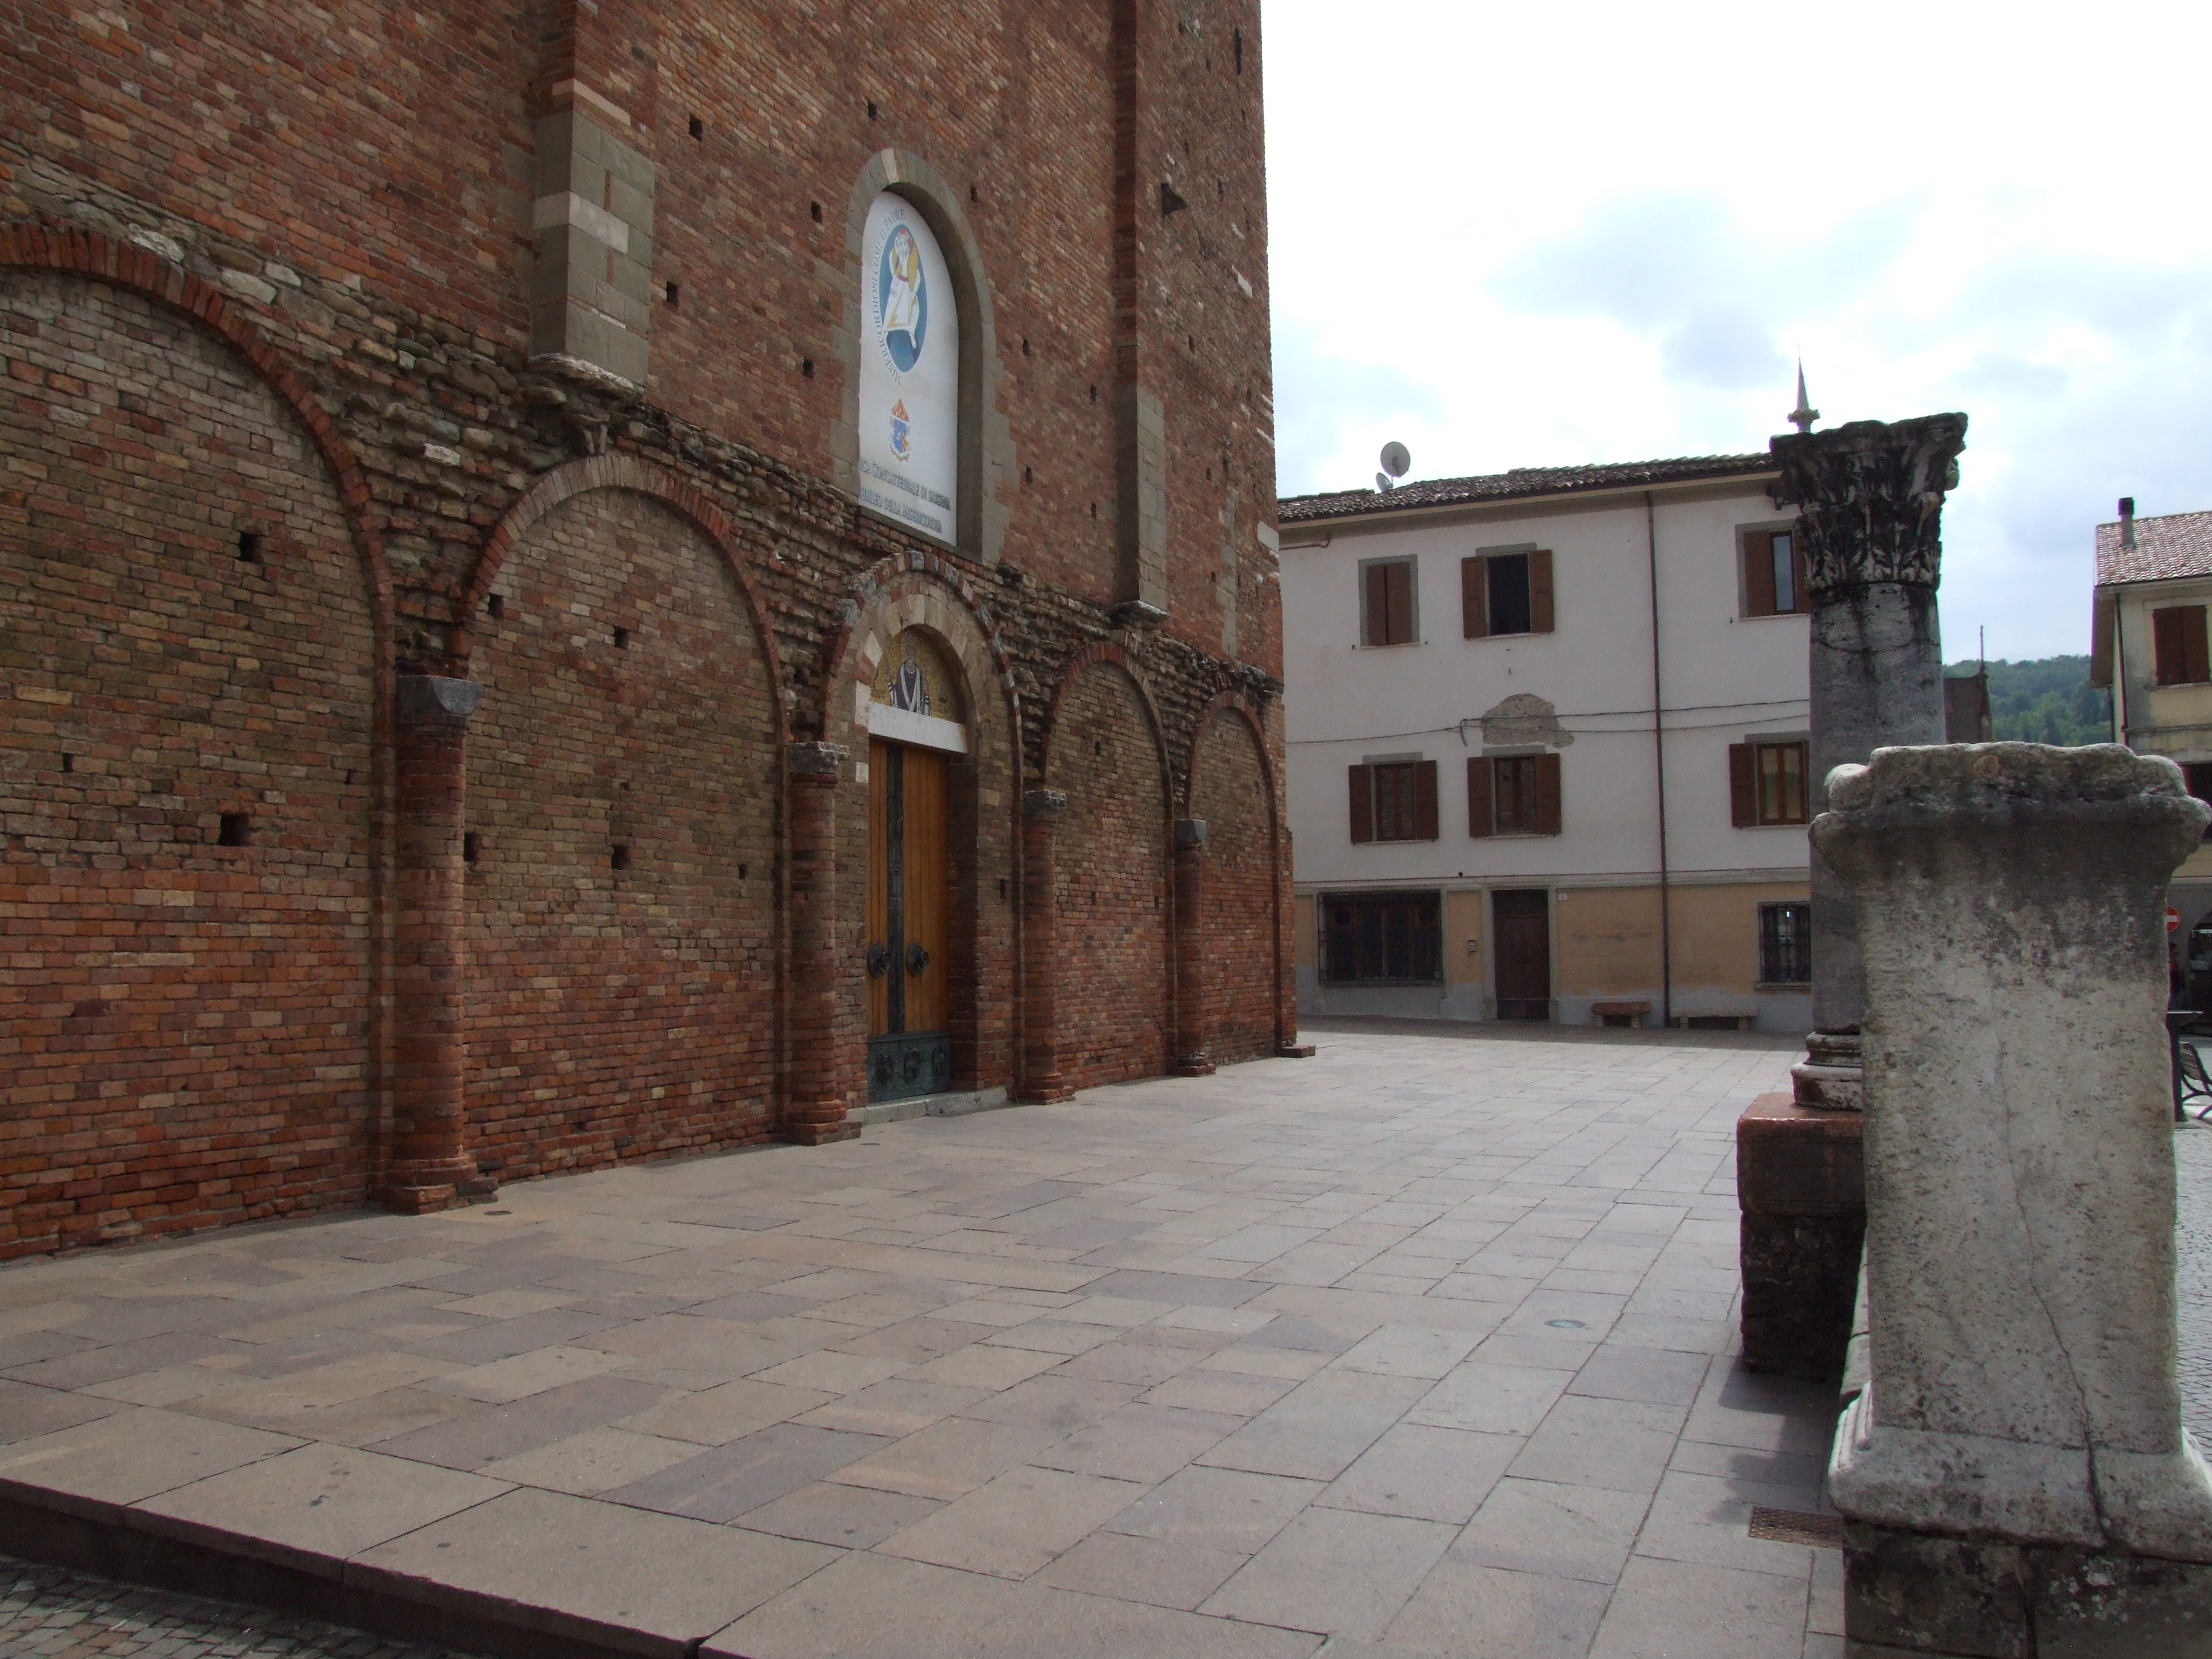 foto: https://upload.wikimedia.org/wikipedia/commons/b/b2/Basilica_concattedrale_di_Sarsina_-_7.jpg